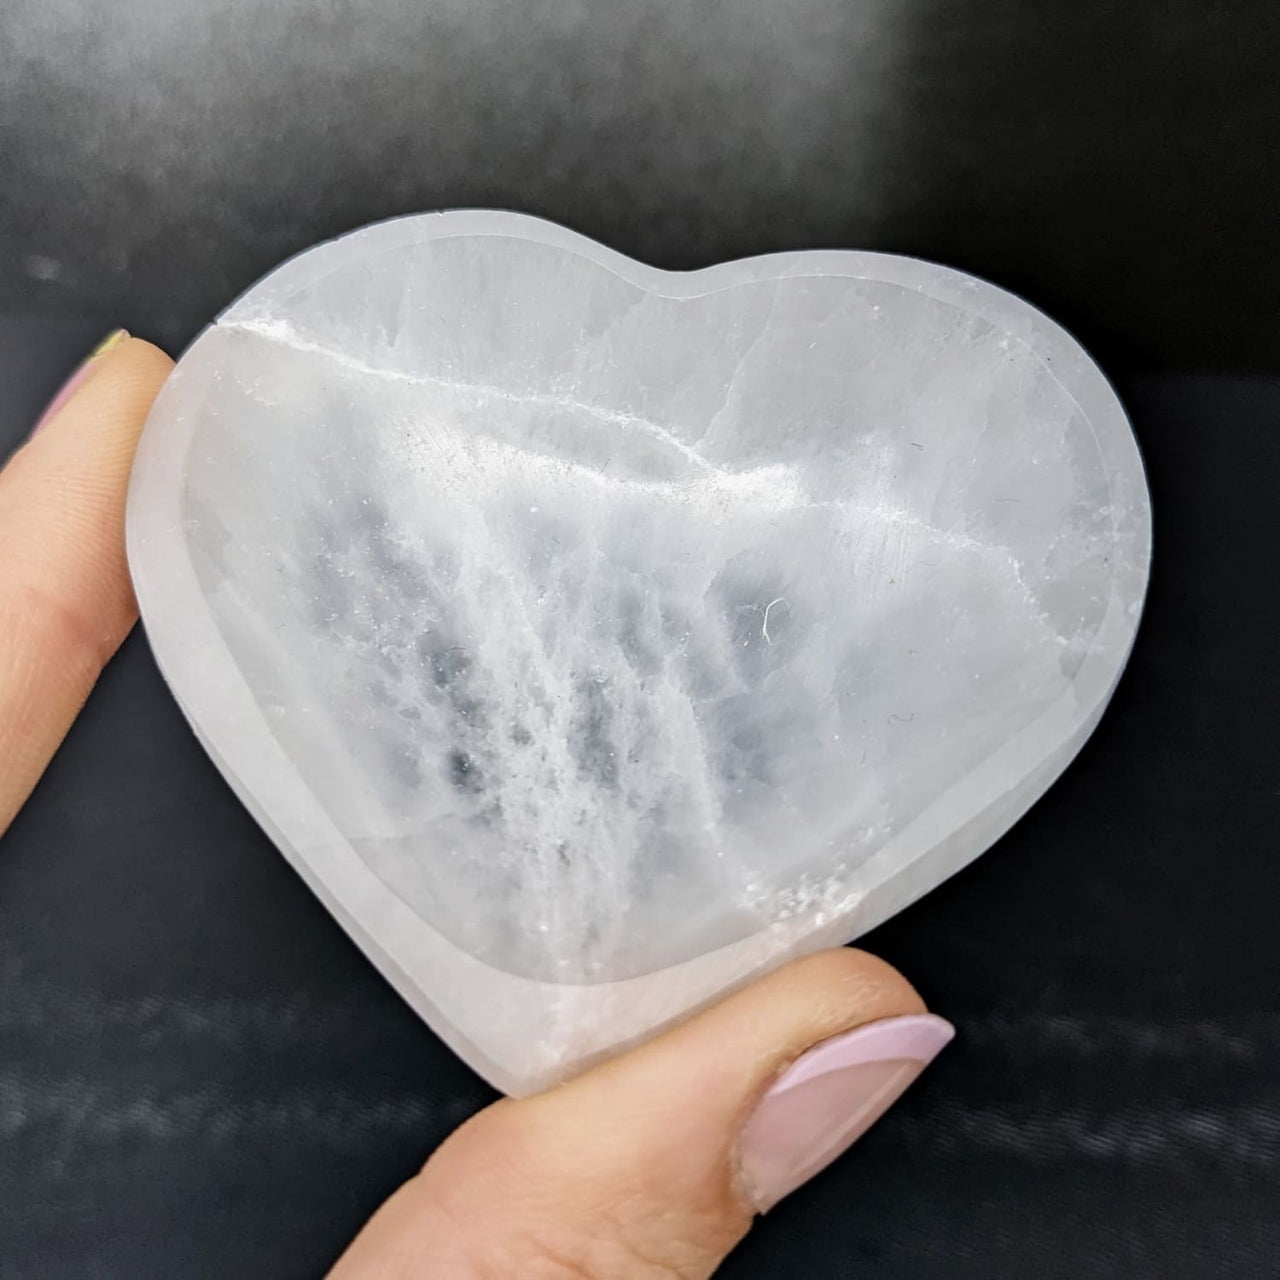 1 Selenite 2.7 Mini Heart Bowl (approx. 107g) #SK9195 - $25